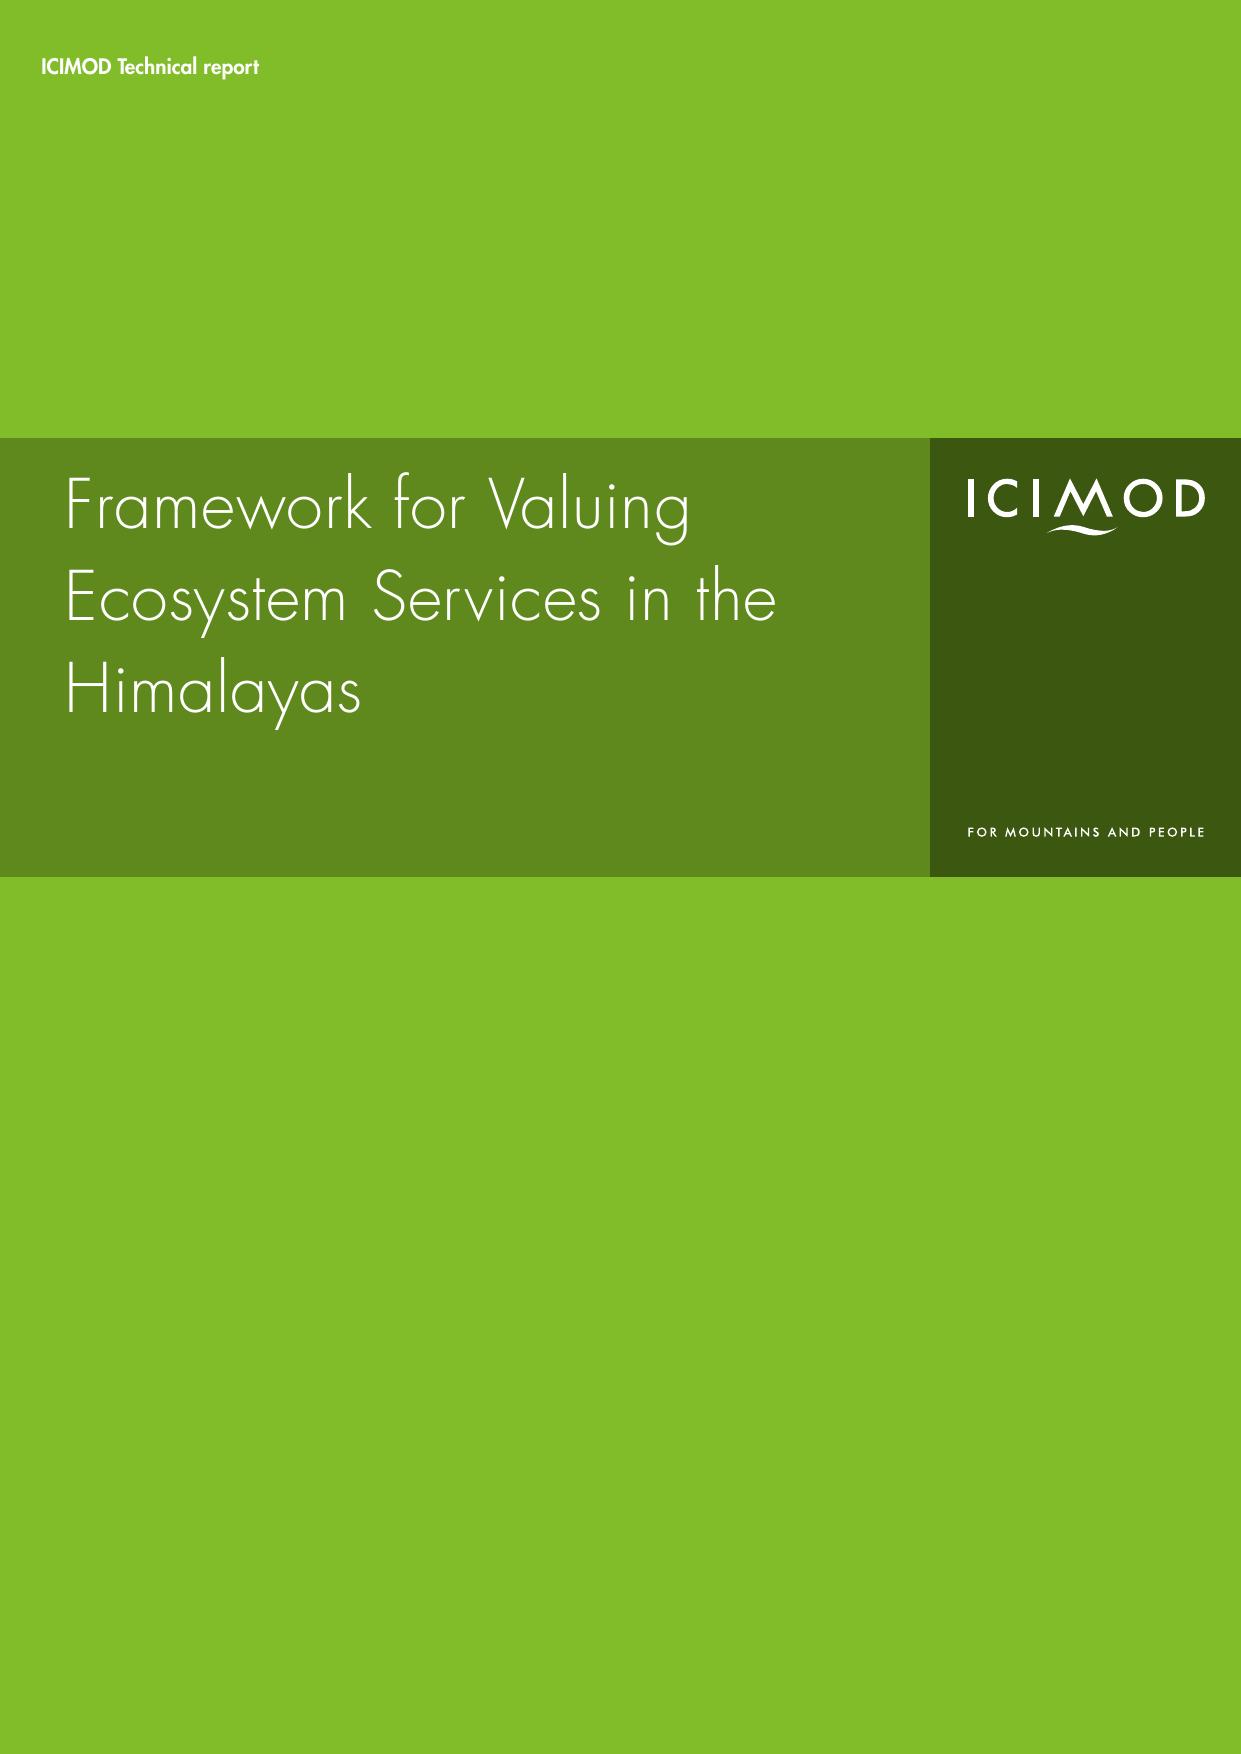 Framework for valuing ecosystem